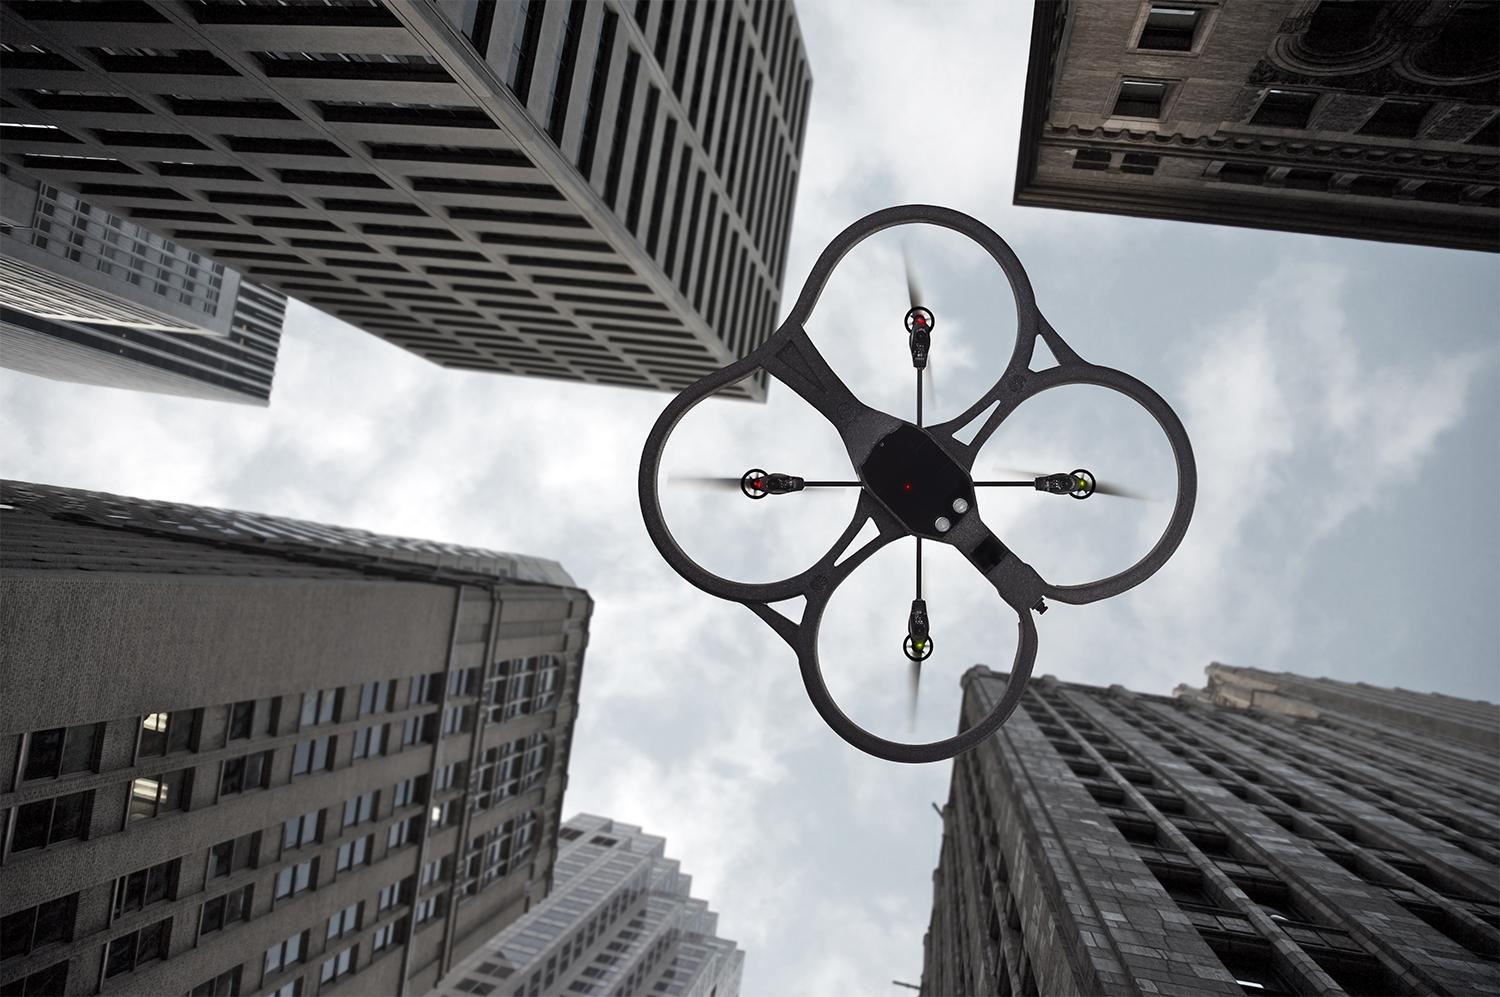 Project wing: google unveils secret delivery drone program